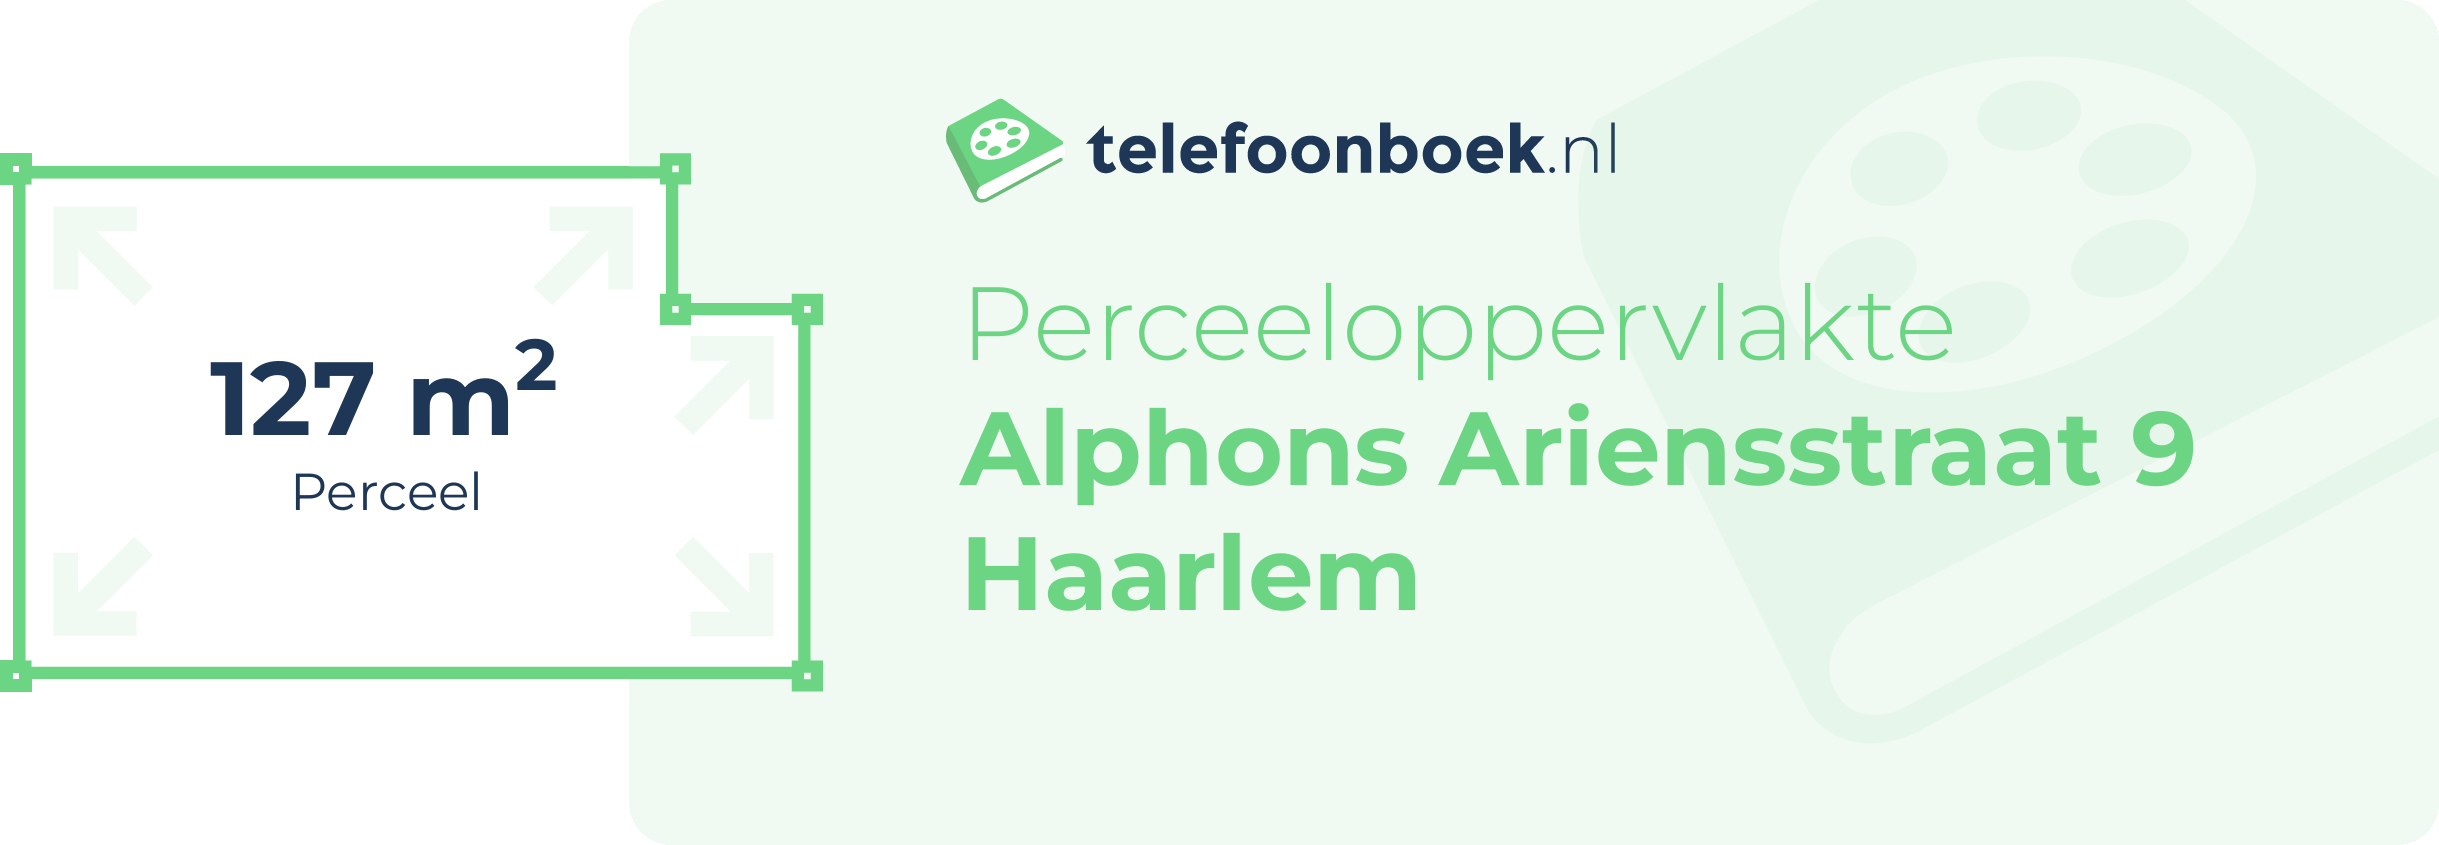 Perceeloppervlakte Alphons Ariensstraat 9 Haarlem